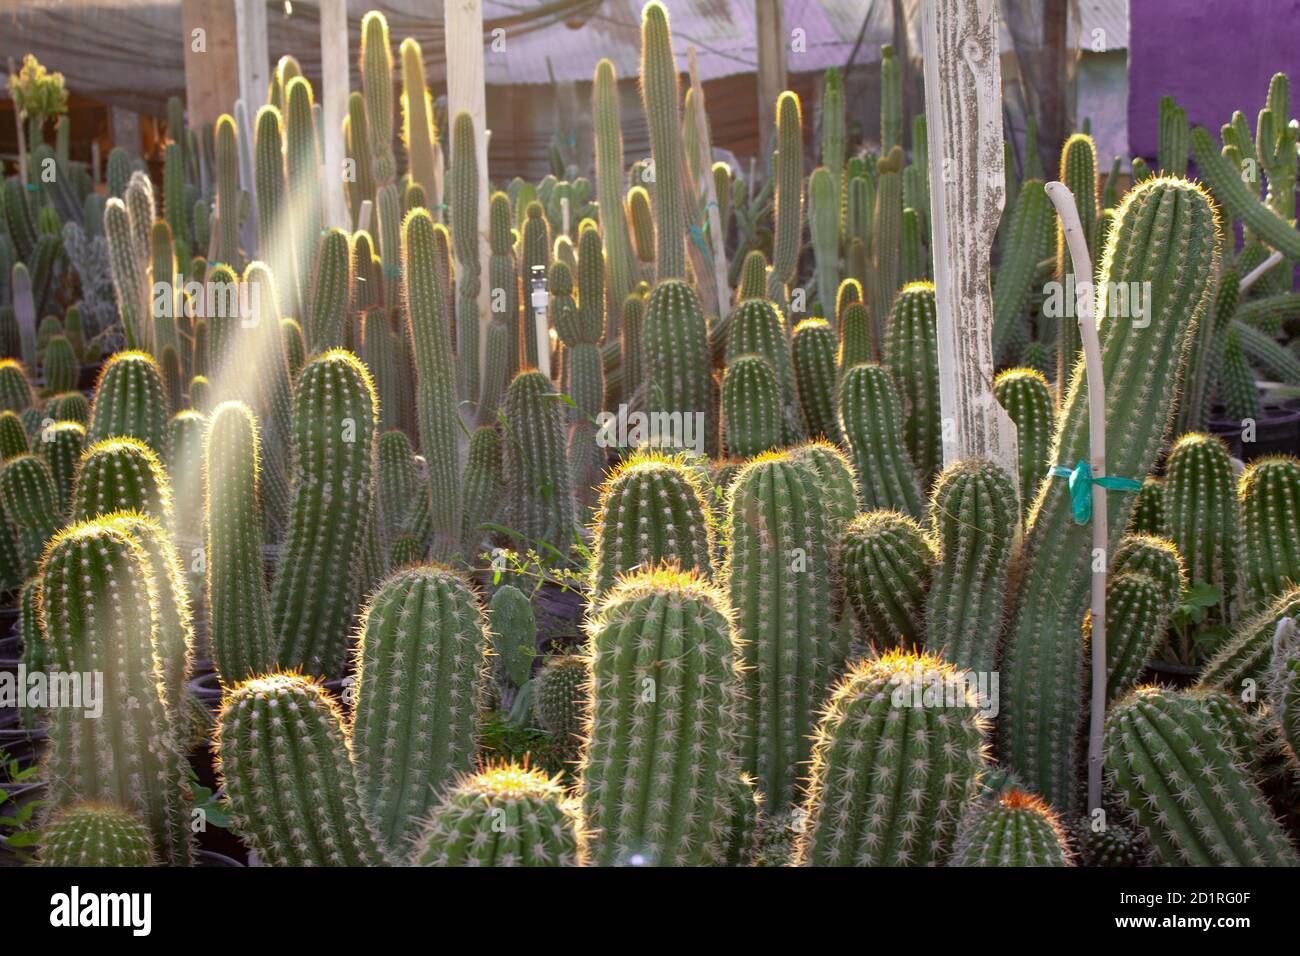 Saguaro Kaktus wachsen in einer Wüstengarten Gärtnerei in Arizona Stockfoto